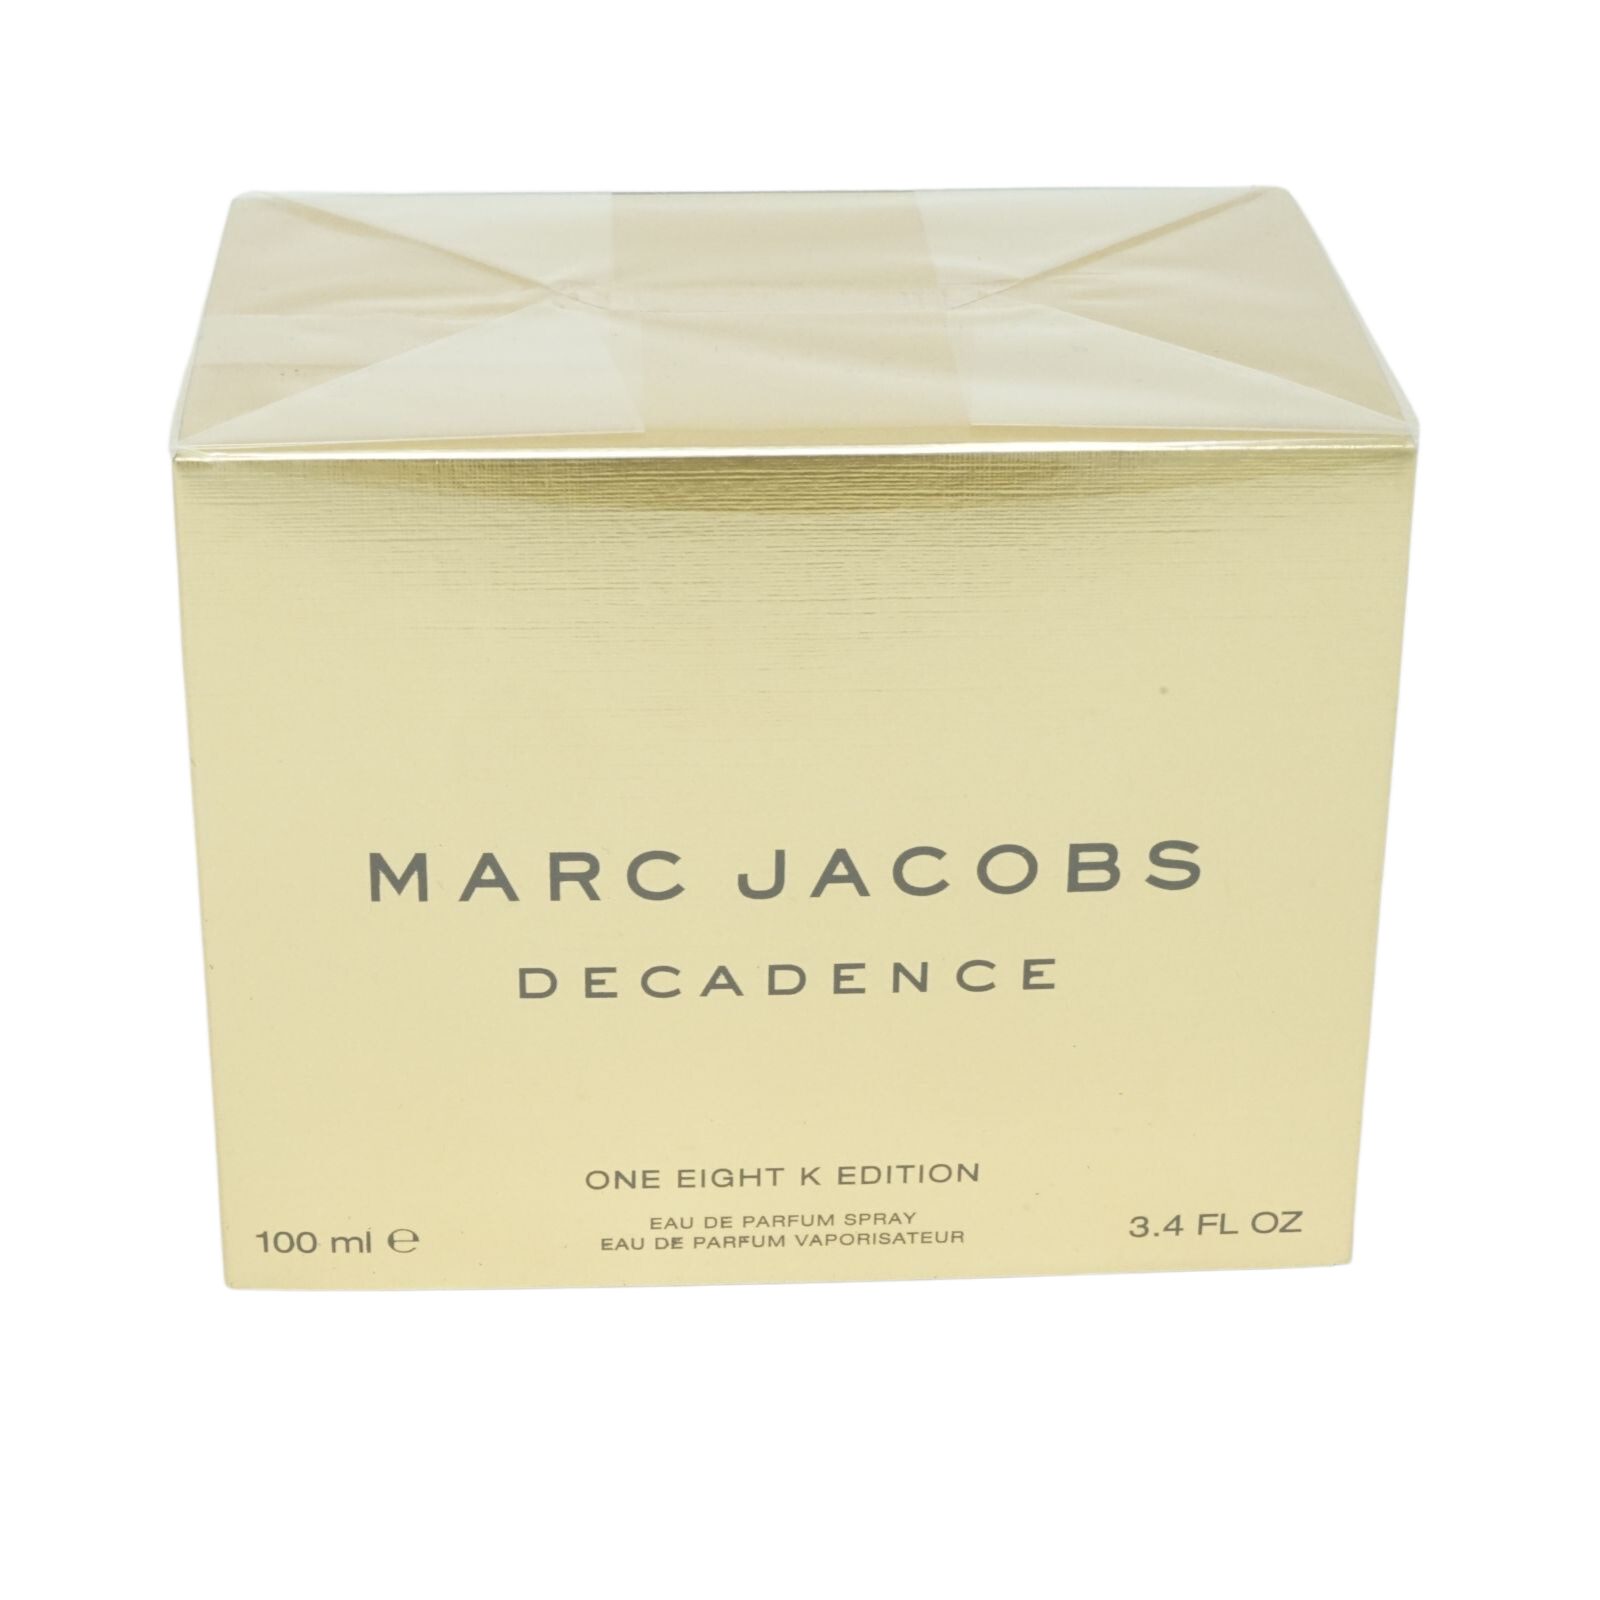 MARC JACOBS Eau de Parfum Marc Jacobs Decadence One eight K Edition Eau de parfum Spray 100ml